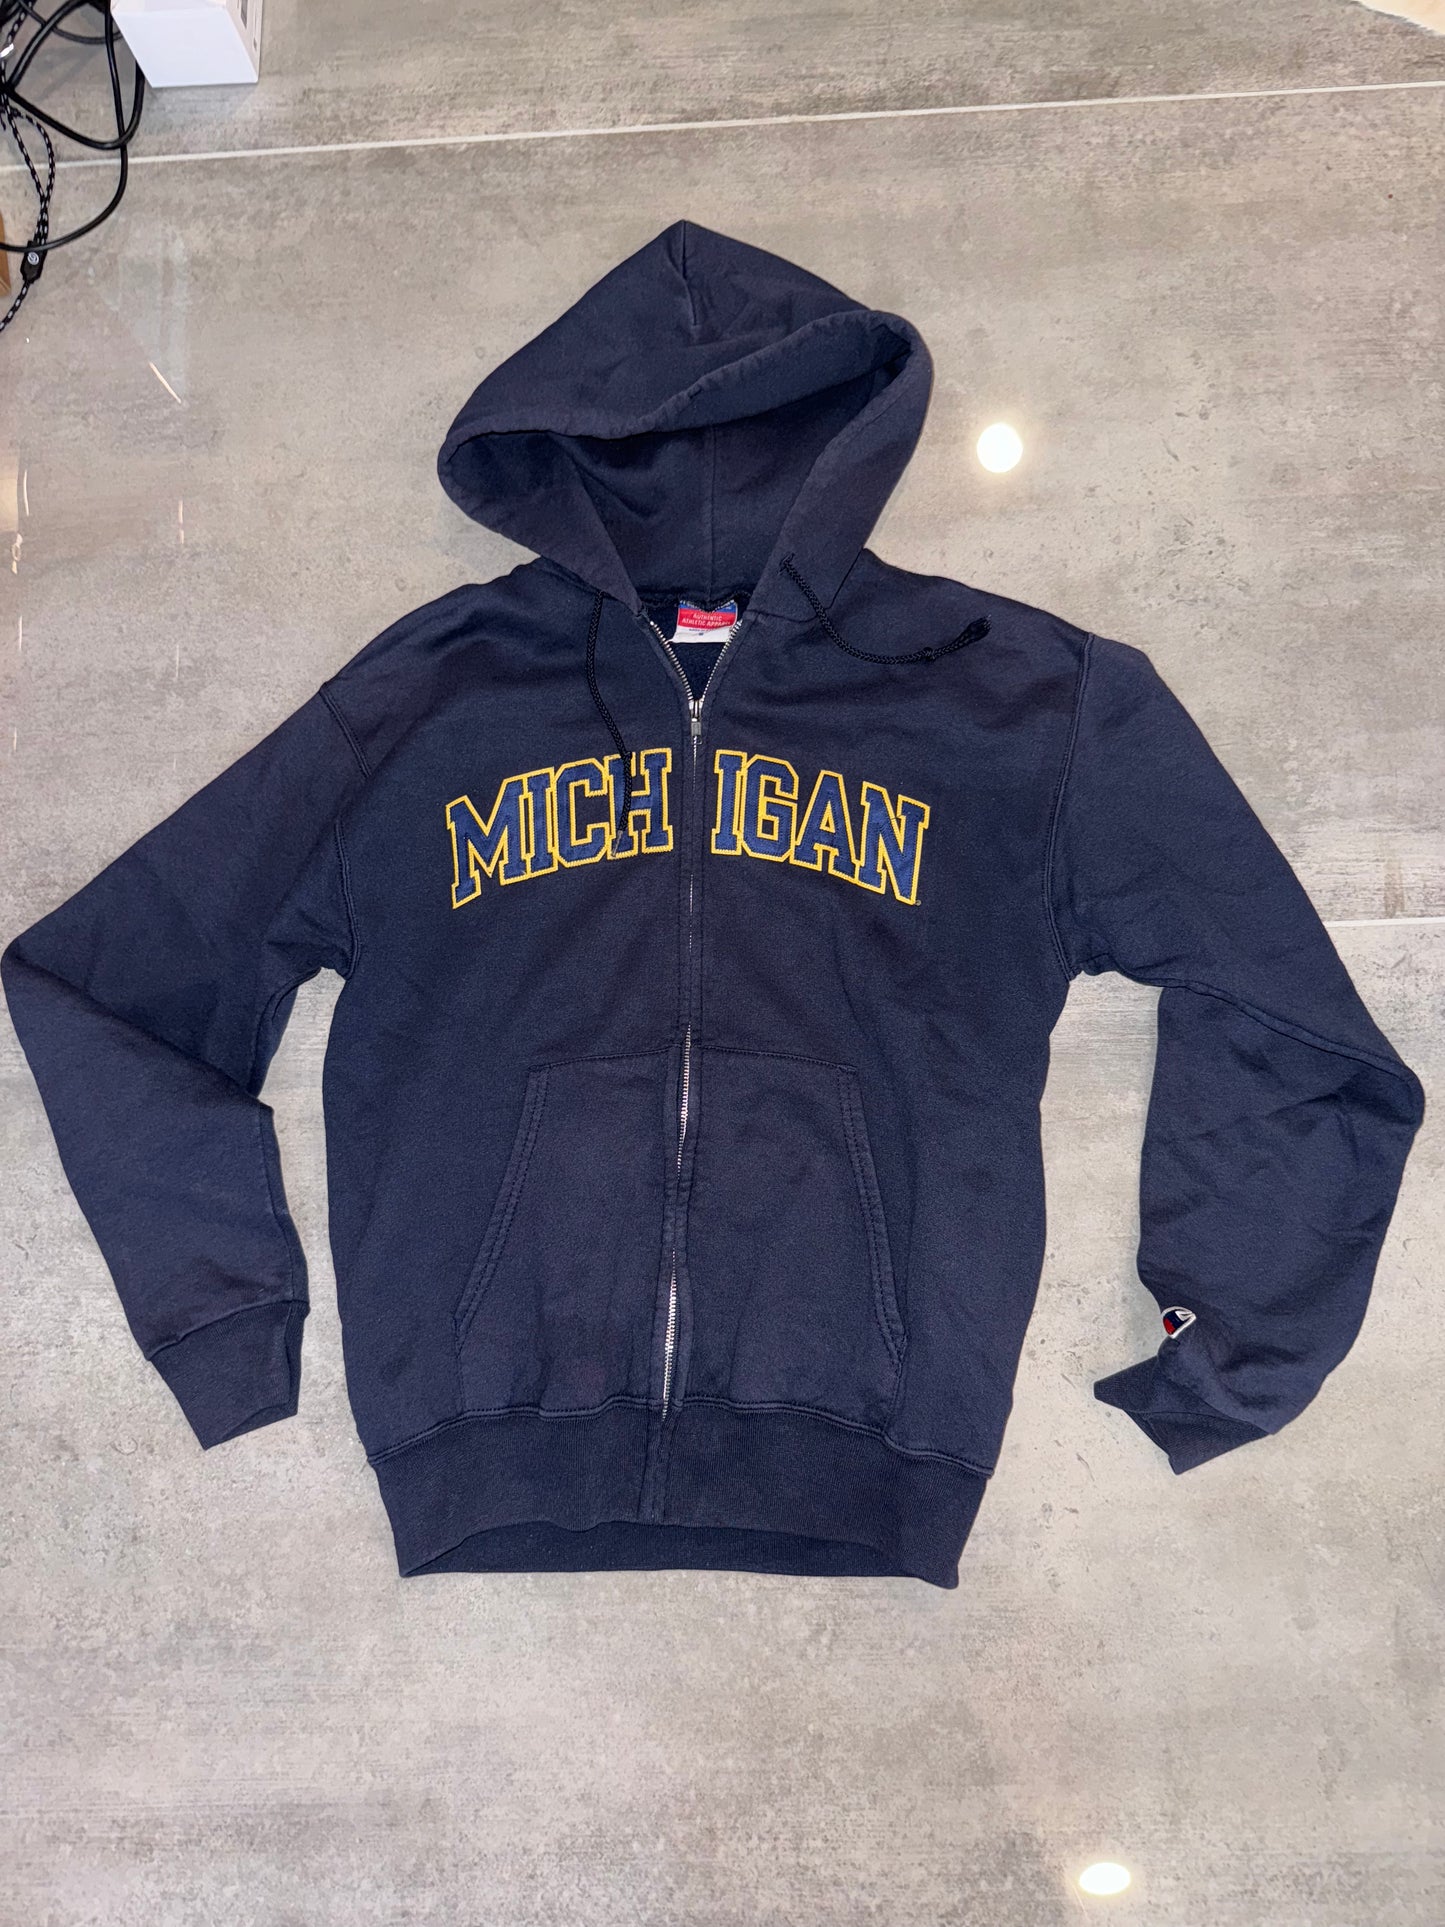 Vintage Nike Champion Michigan hoodie 90’s